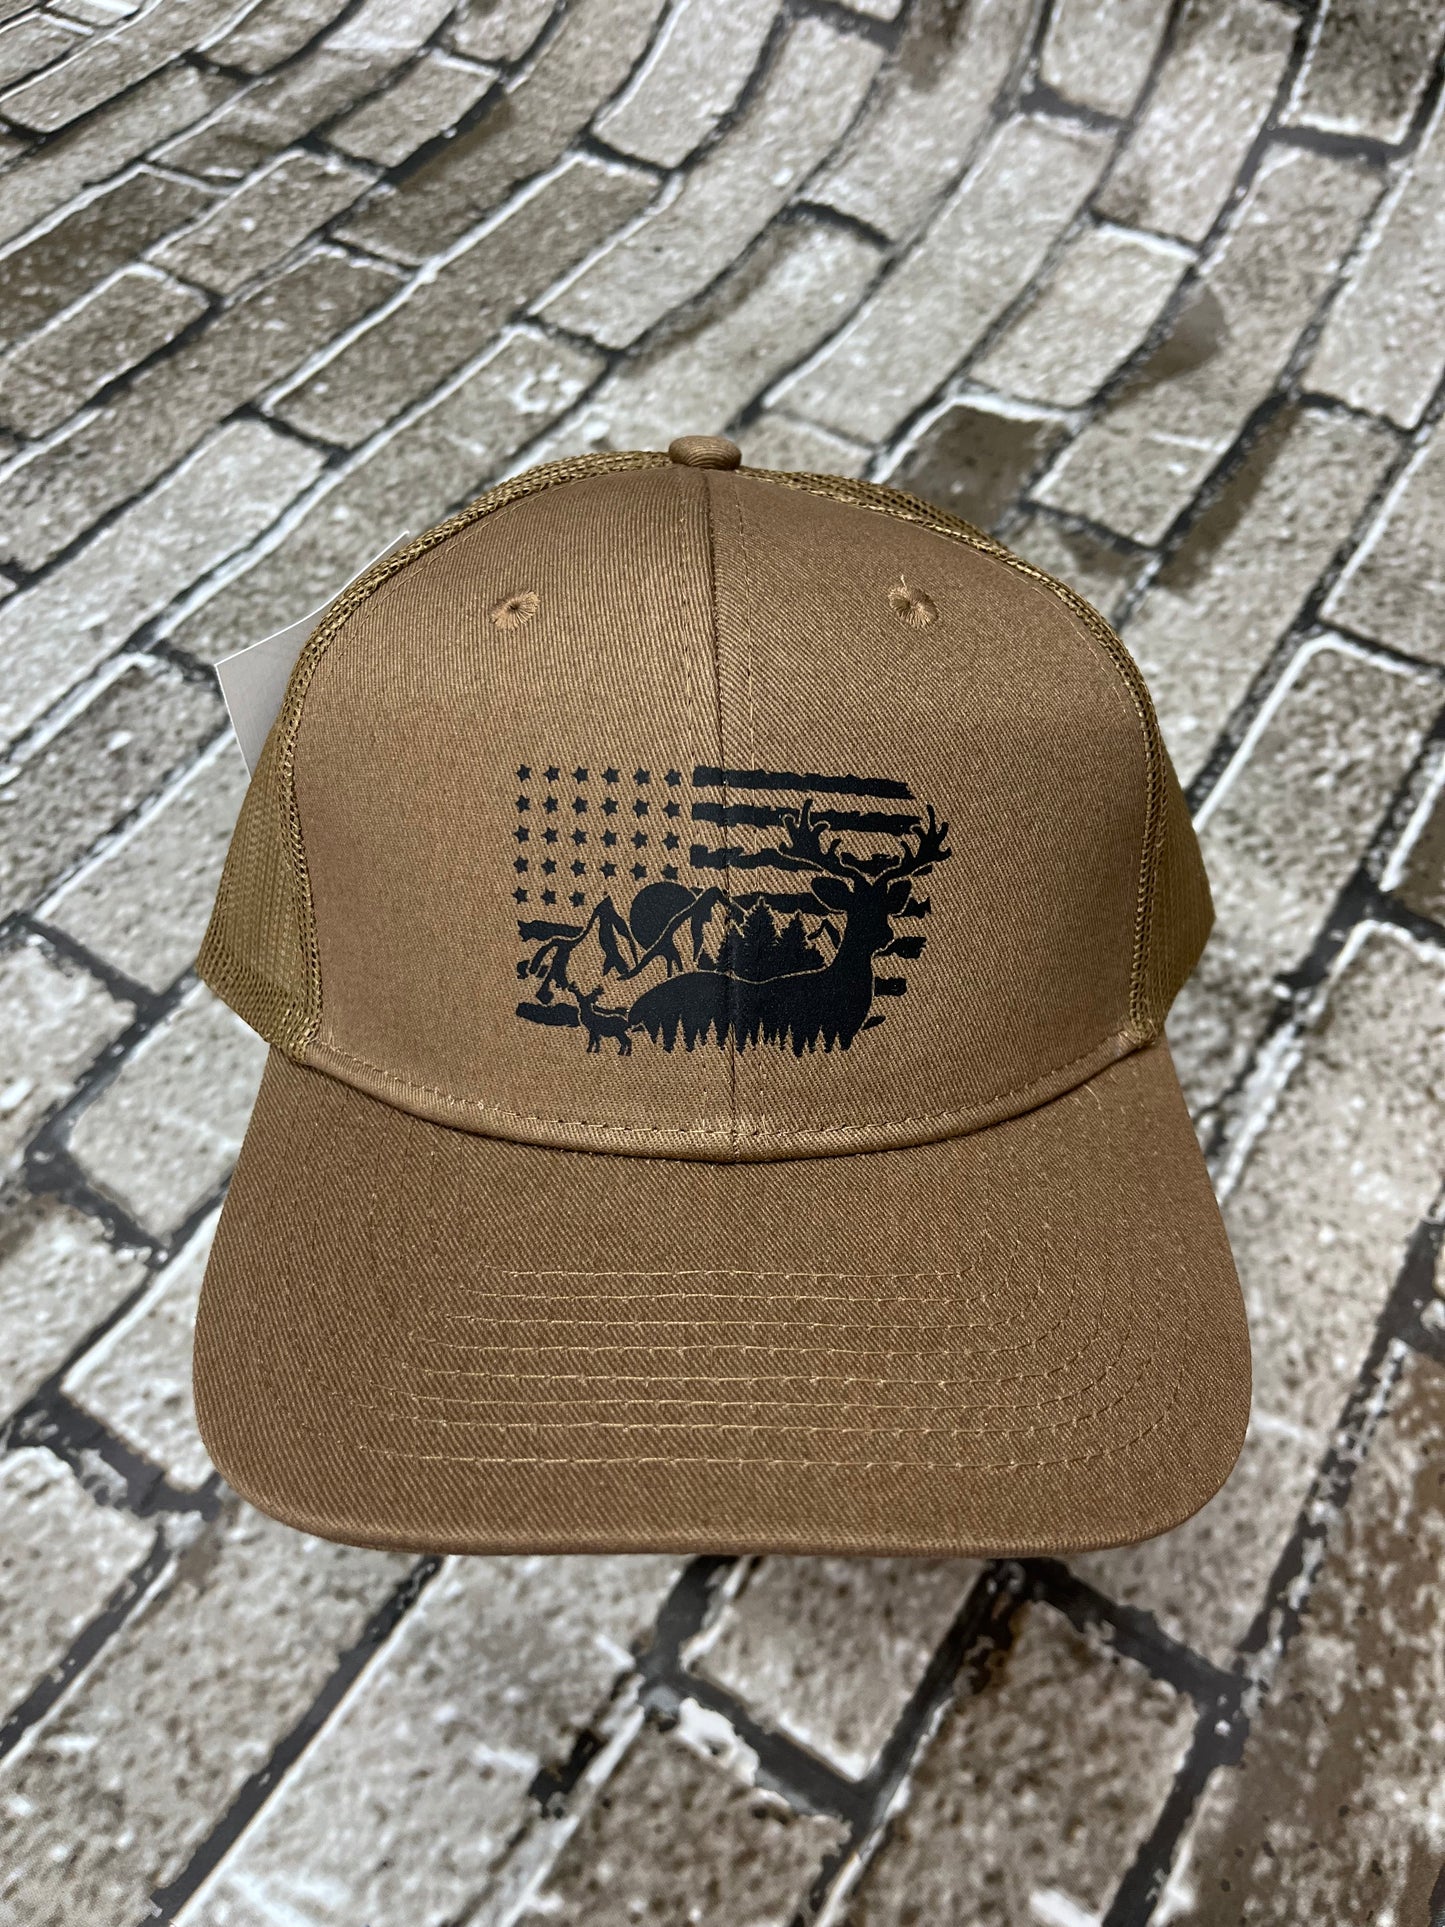 Outdoors Flag Snapback Hat